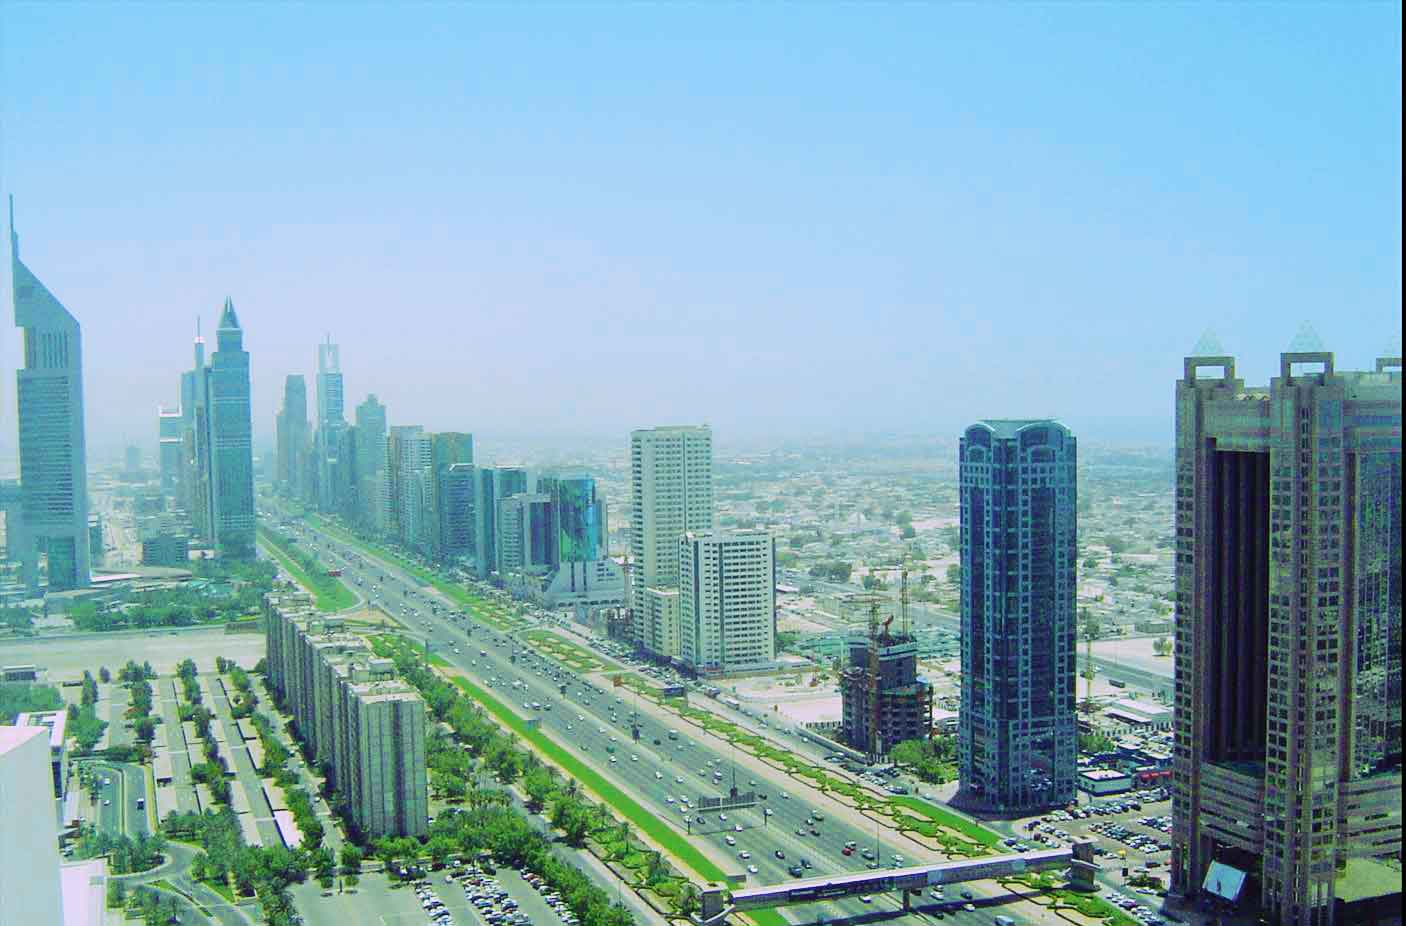 Dubai in 2005